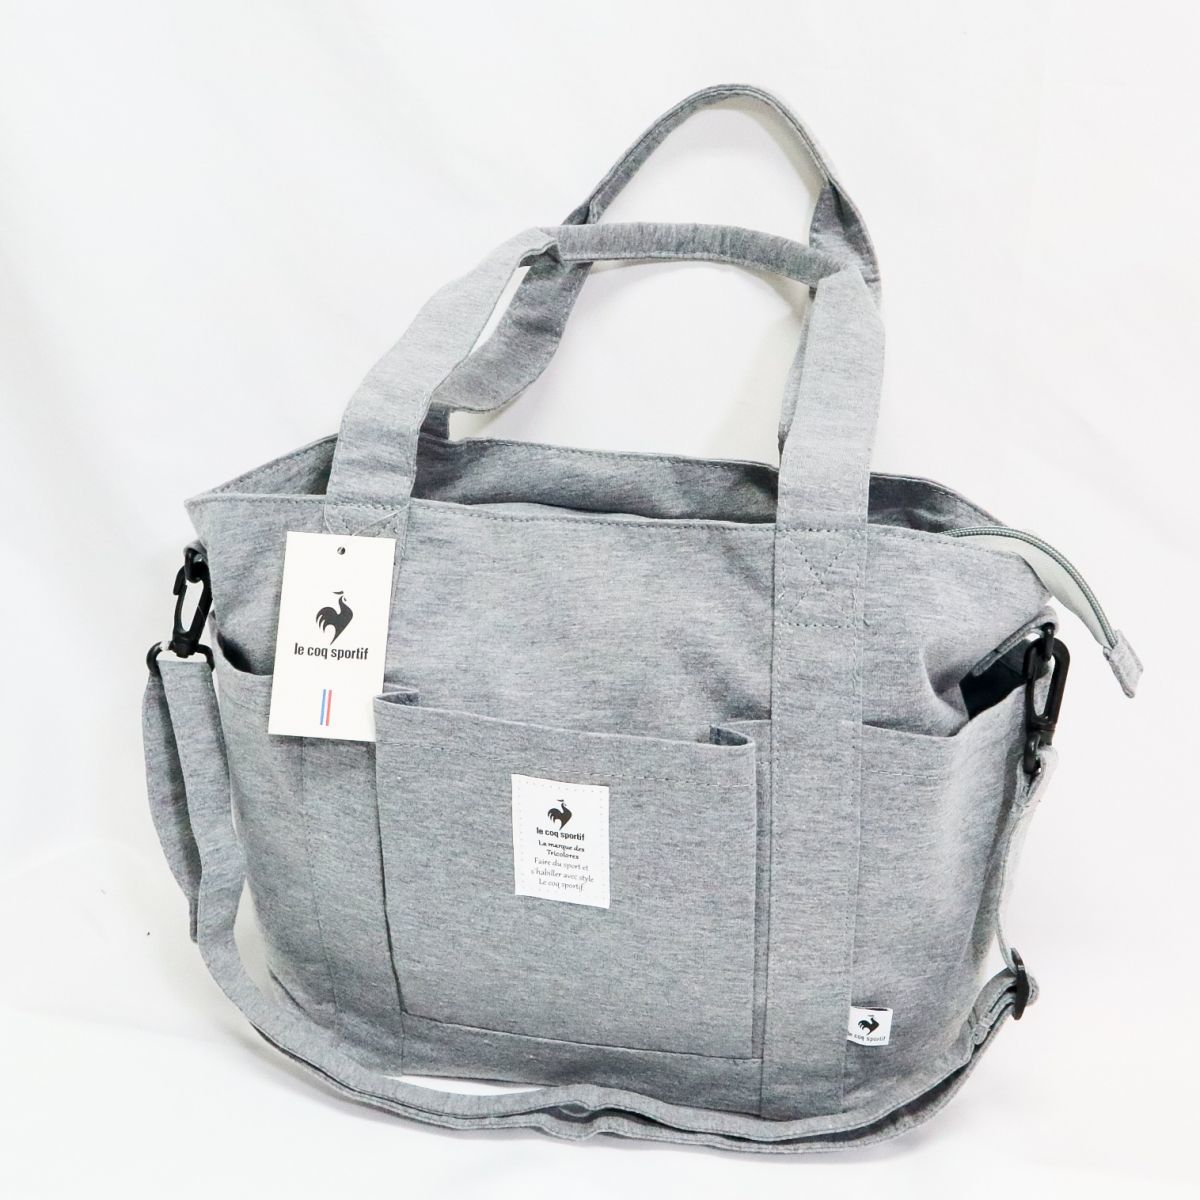 * Le Coq le coq sportif new goods convenience pocket fully simple shoulder tote bag BAG bag bag ash [36237-030] one six *QWER*